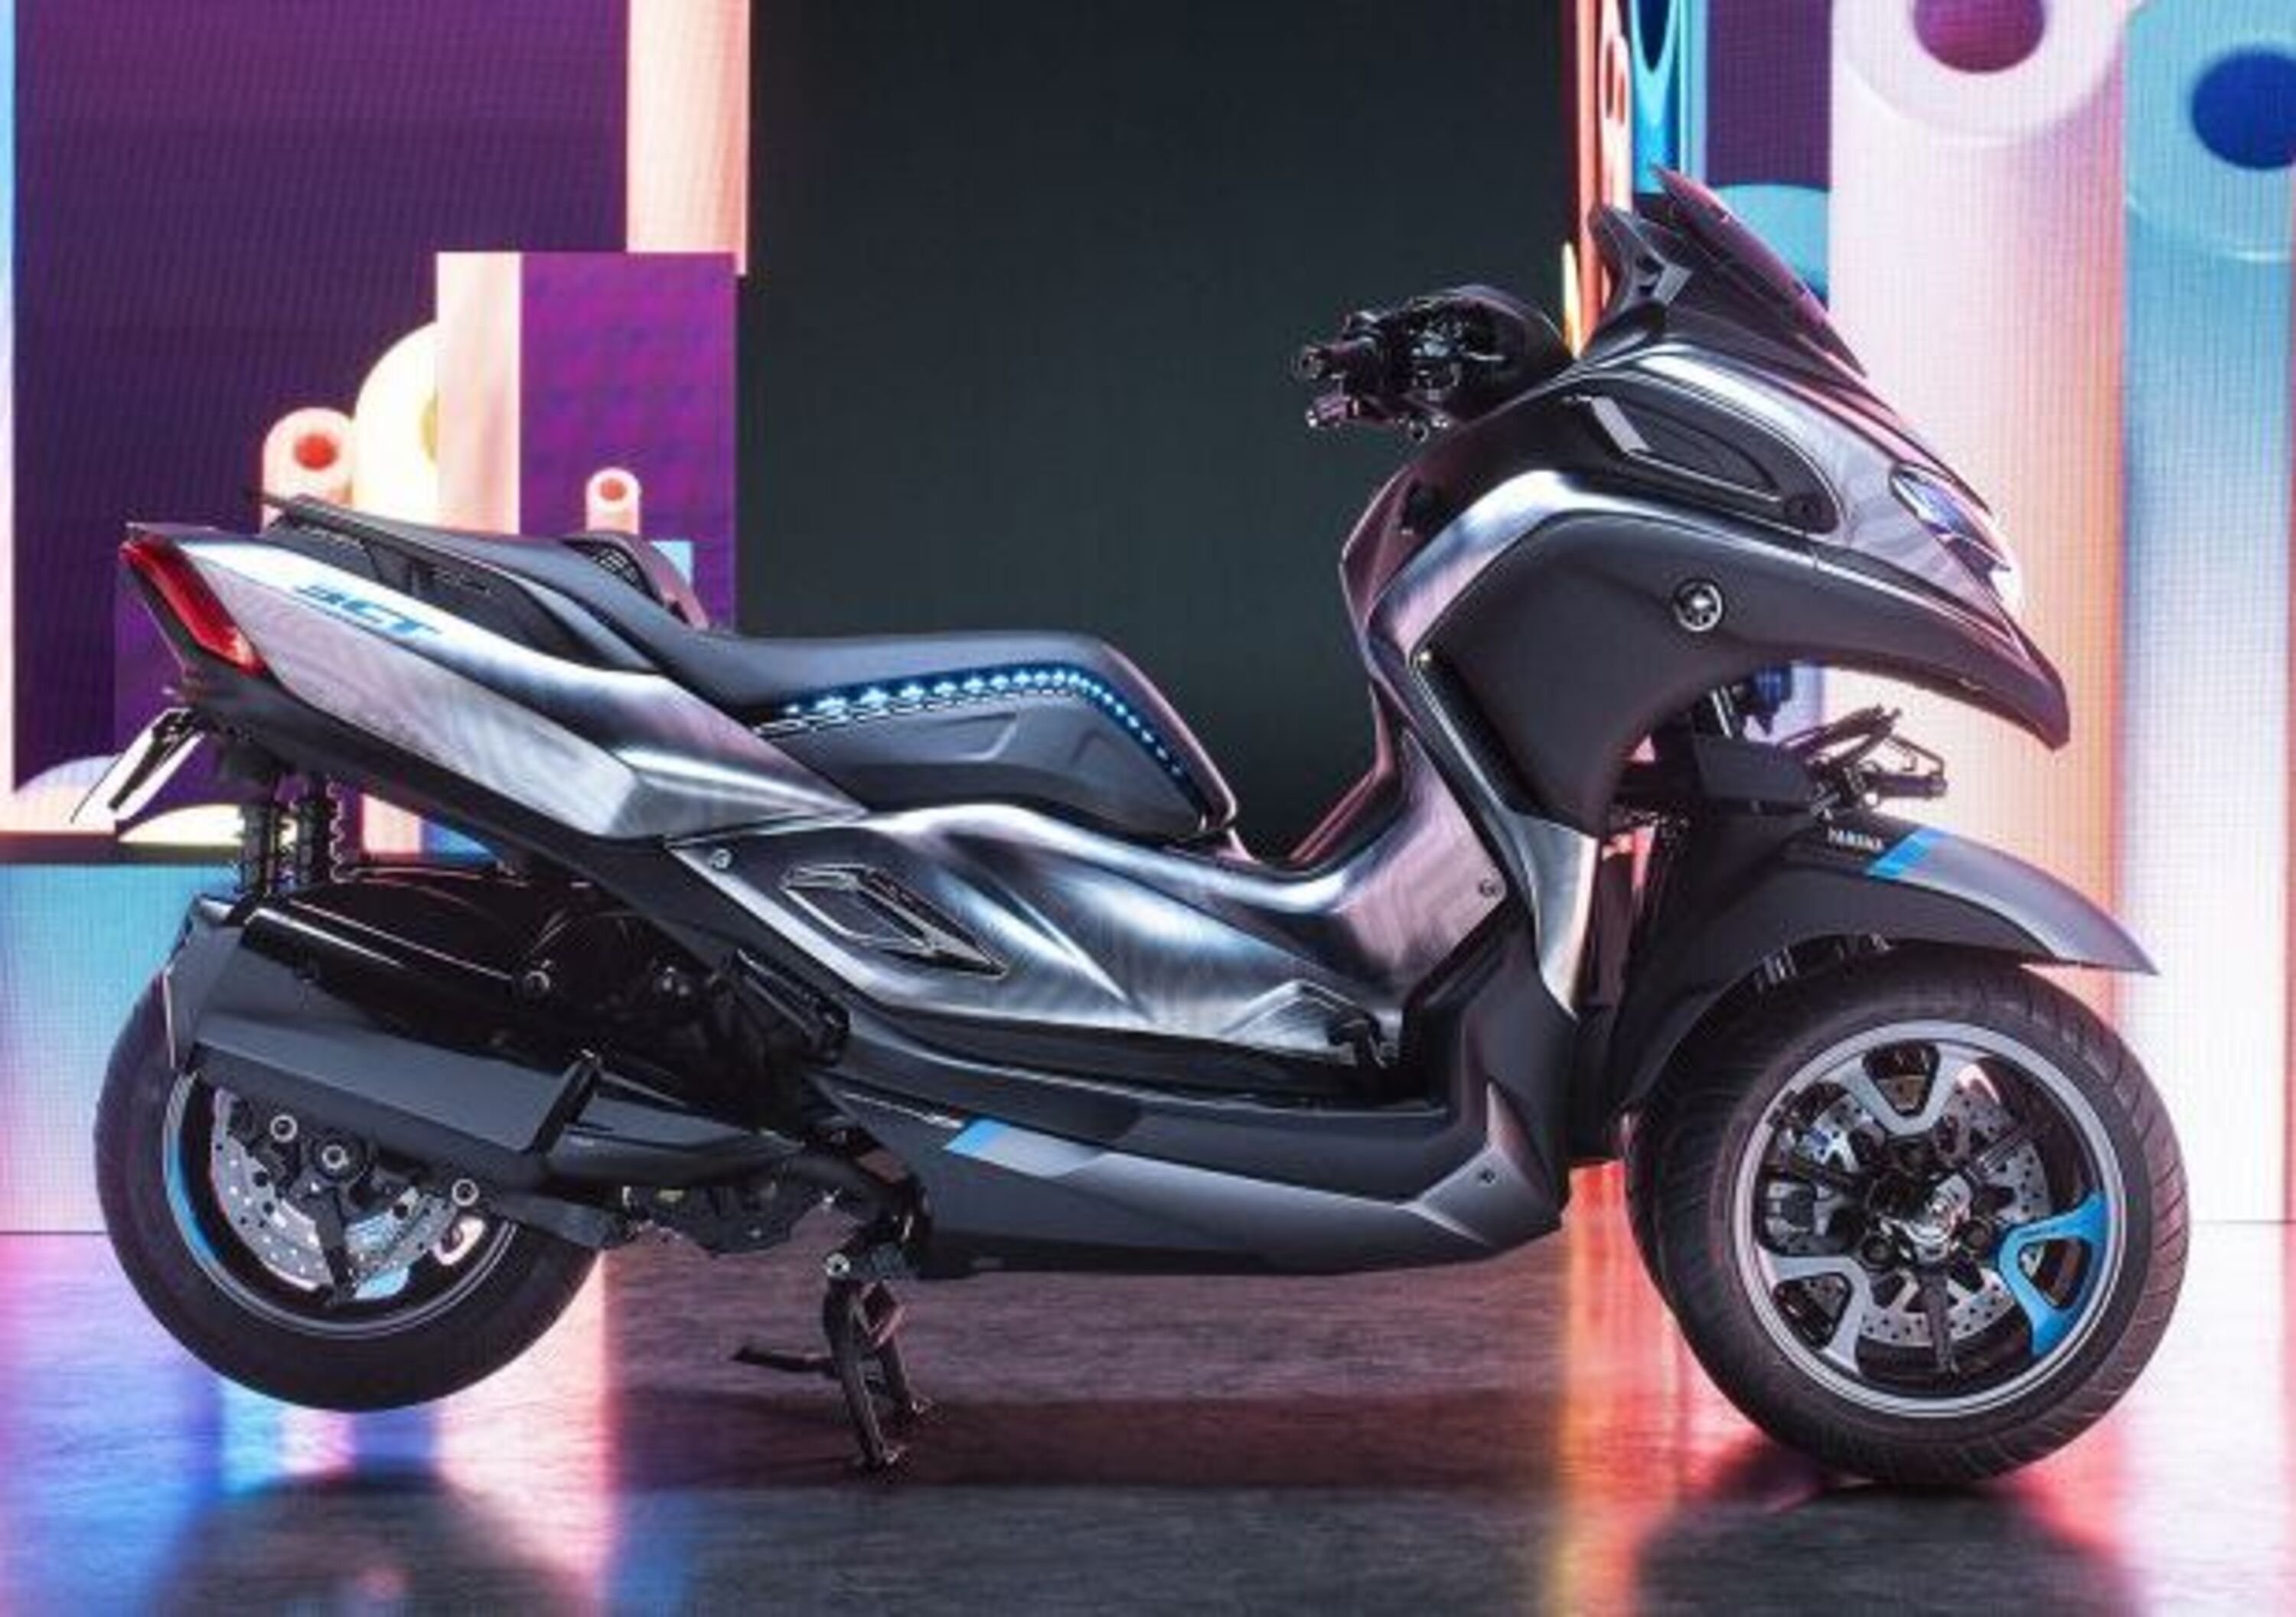 Yamaha a Milano Street Show 2019